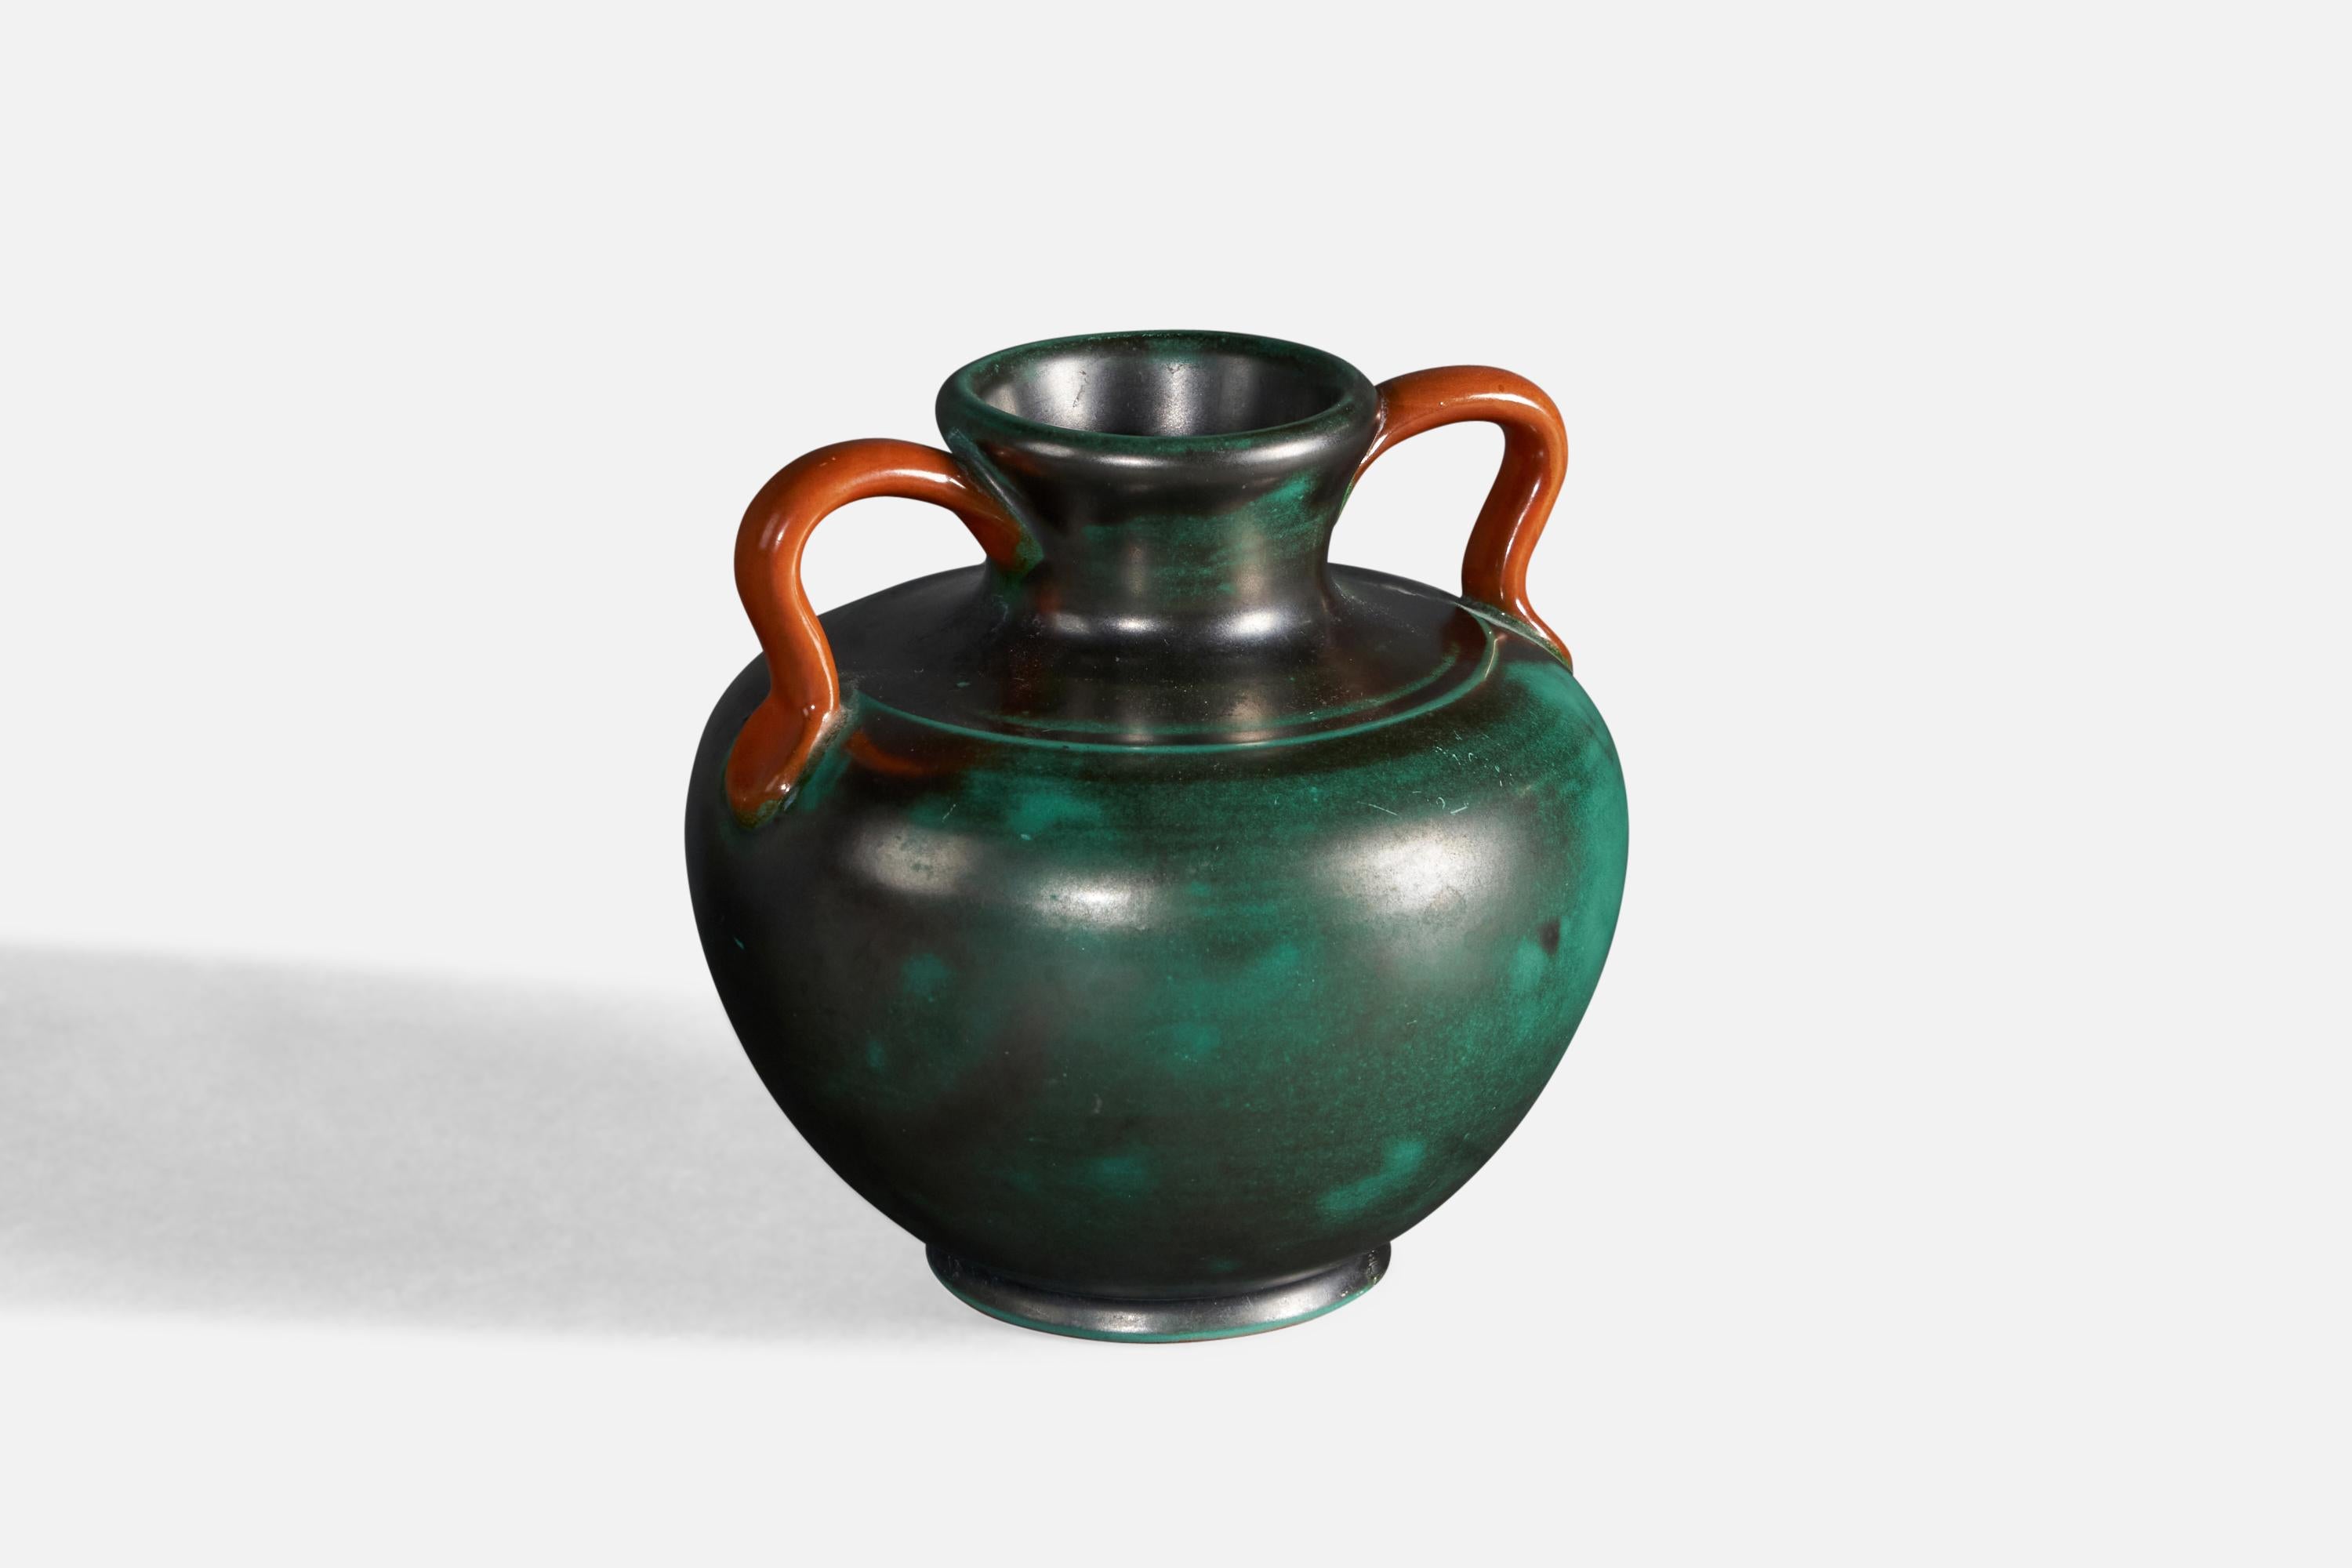 A green and orange-glazed earthenware vase, designed and produced by Upsala Ekeby, Sweden, c. 1930s.